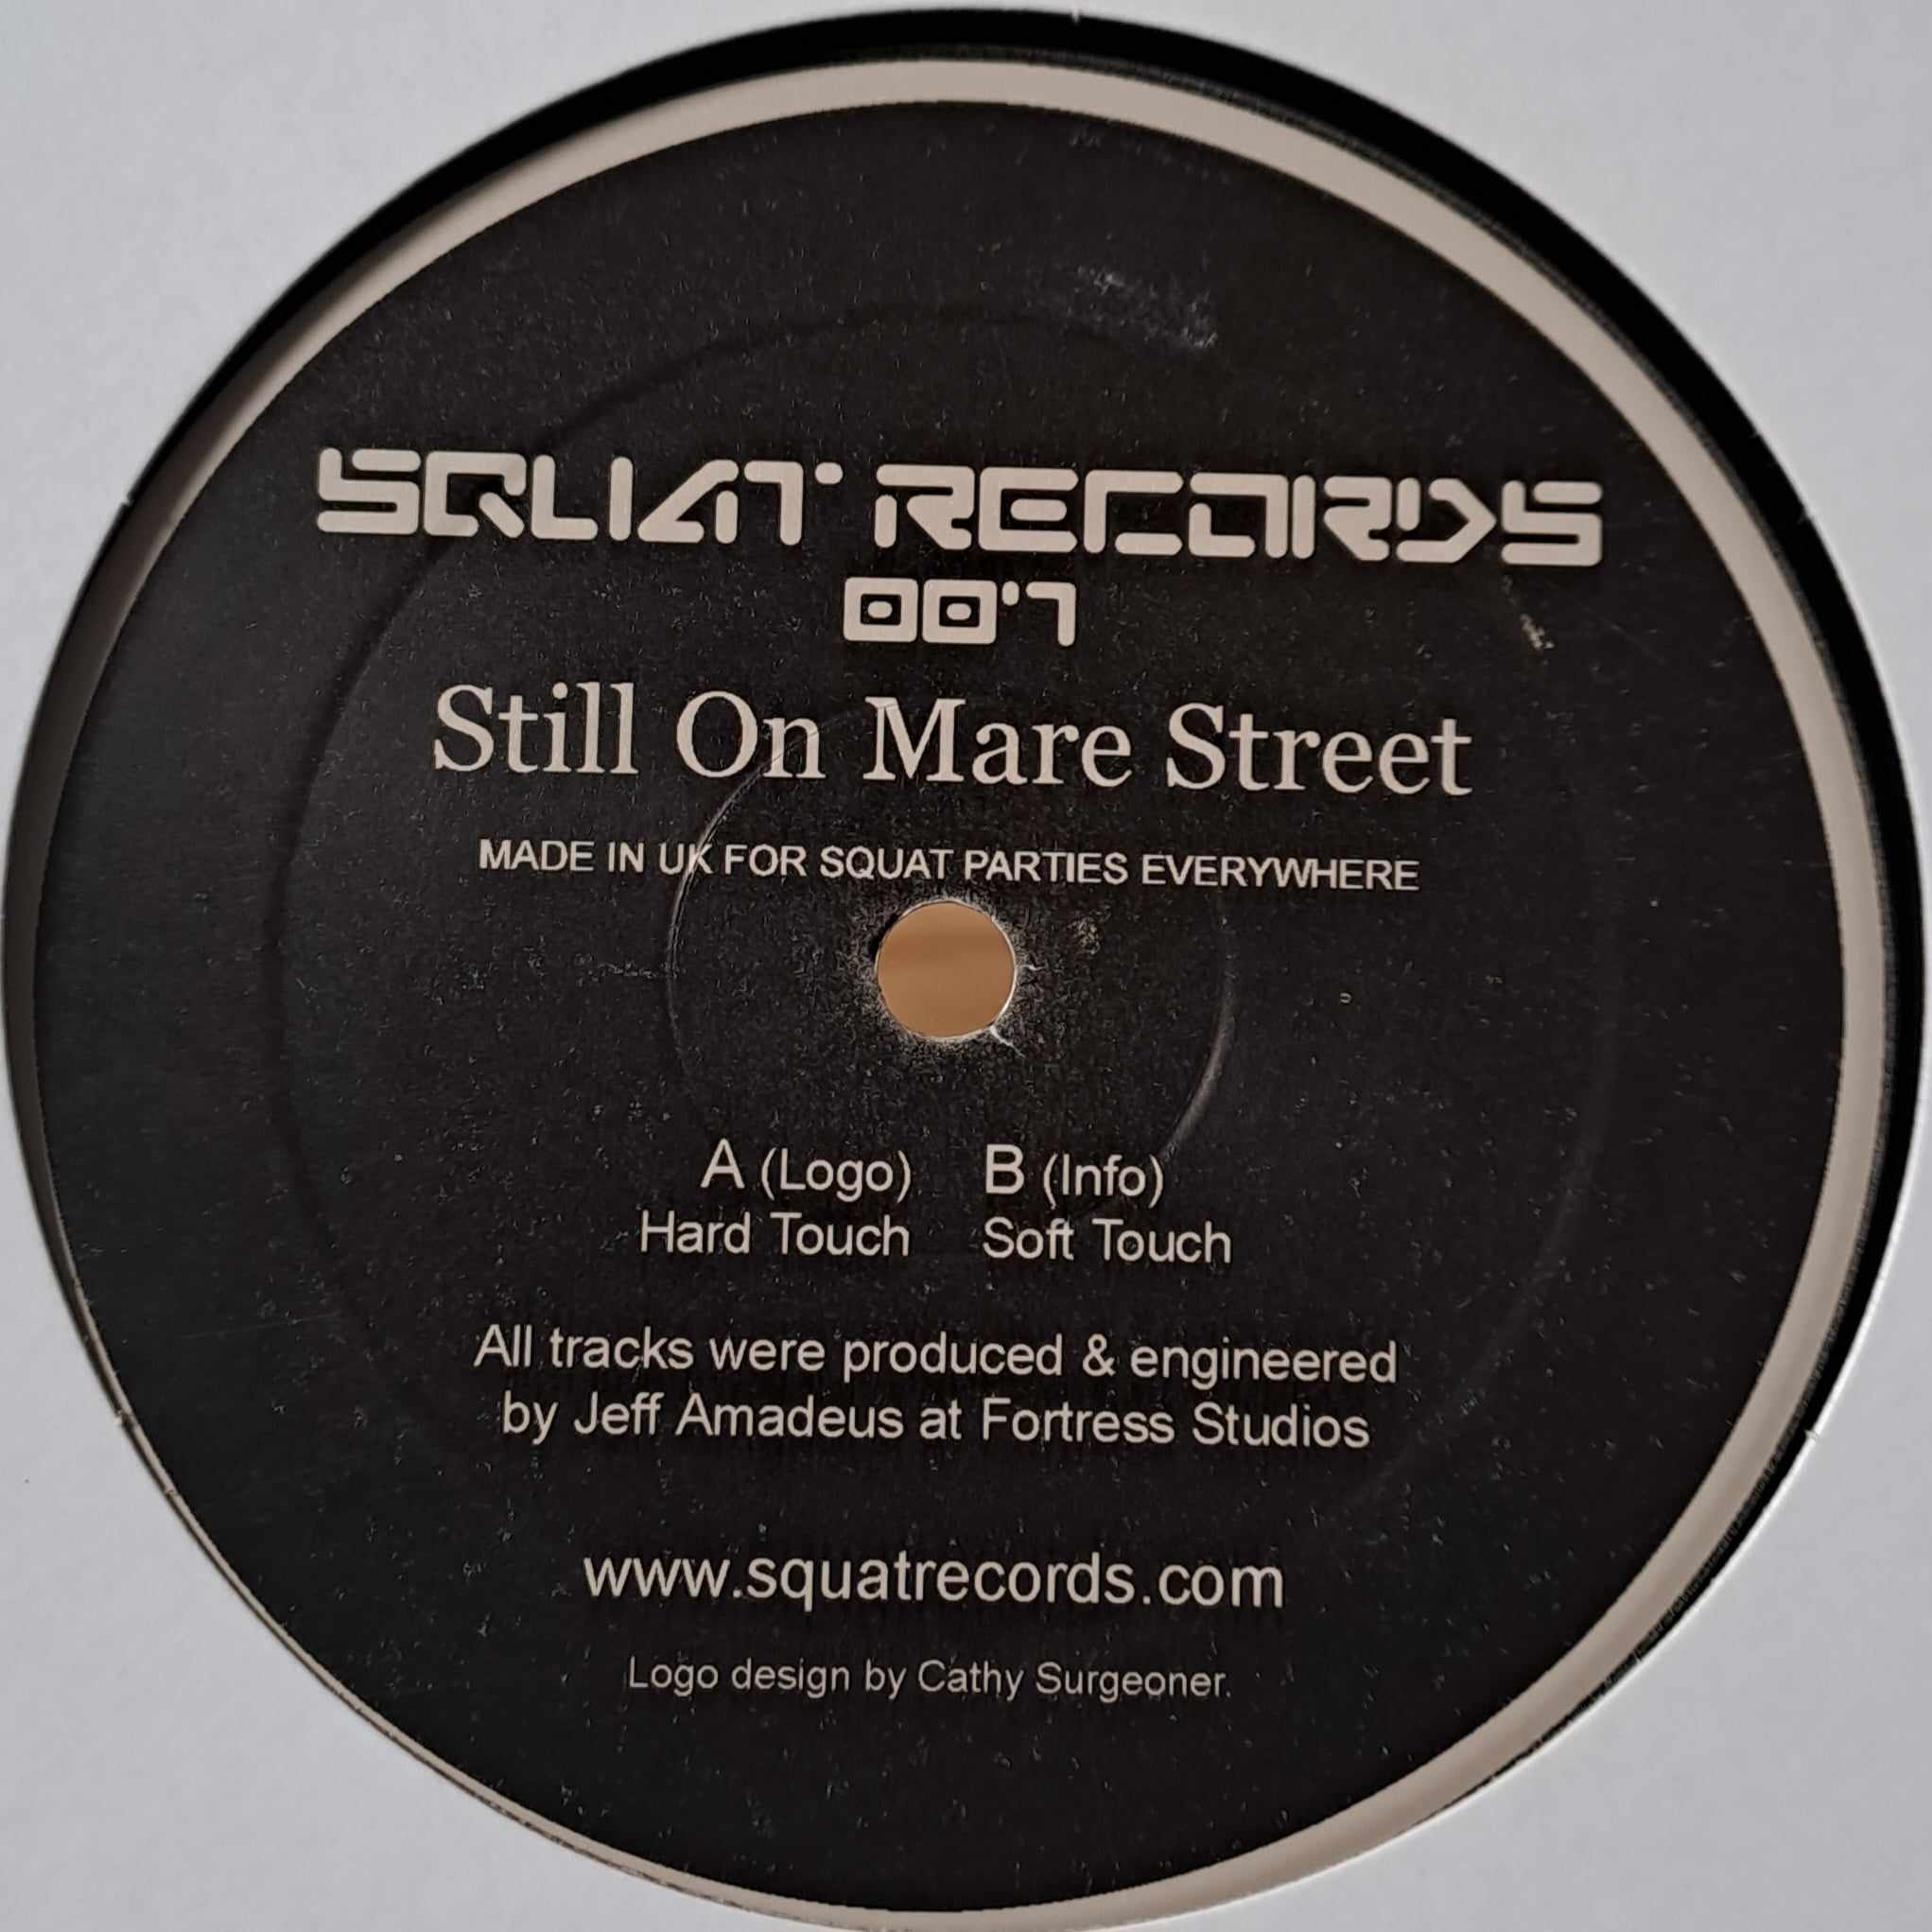 Squat Records 07 - vinyle techno